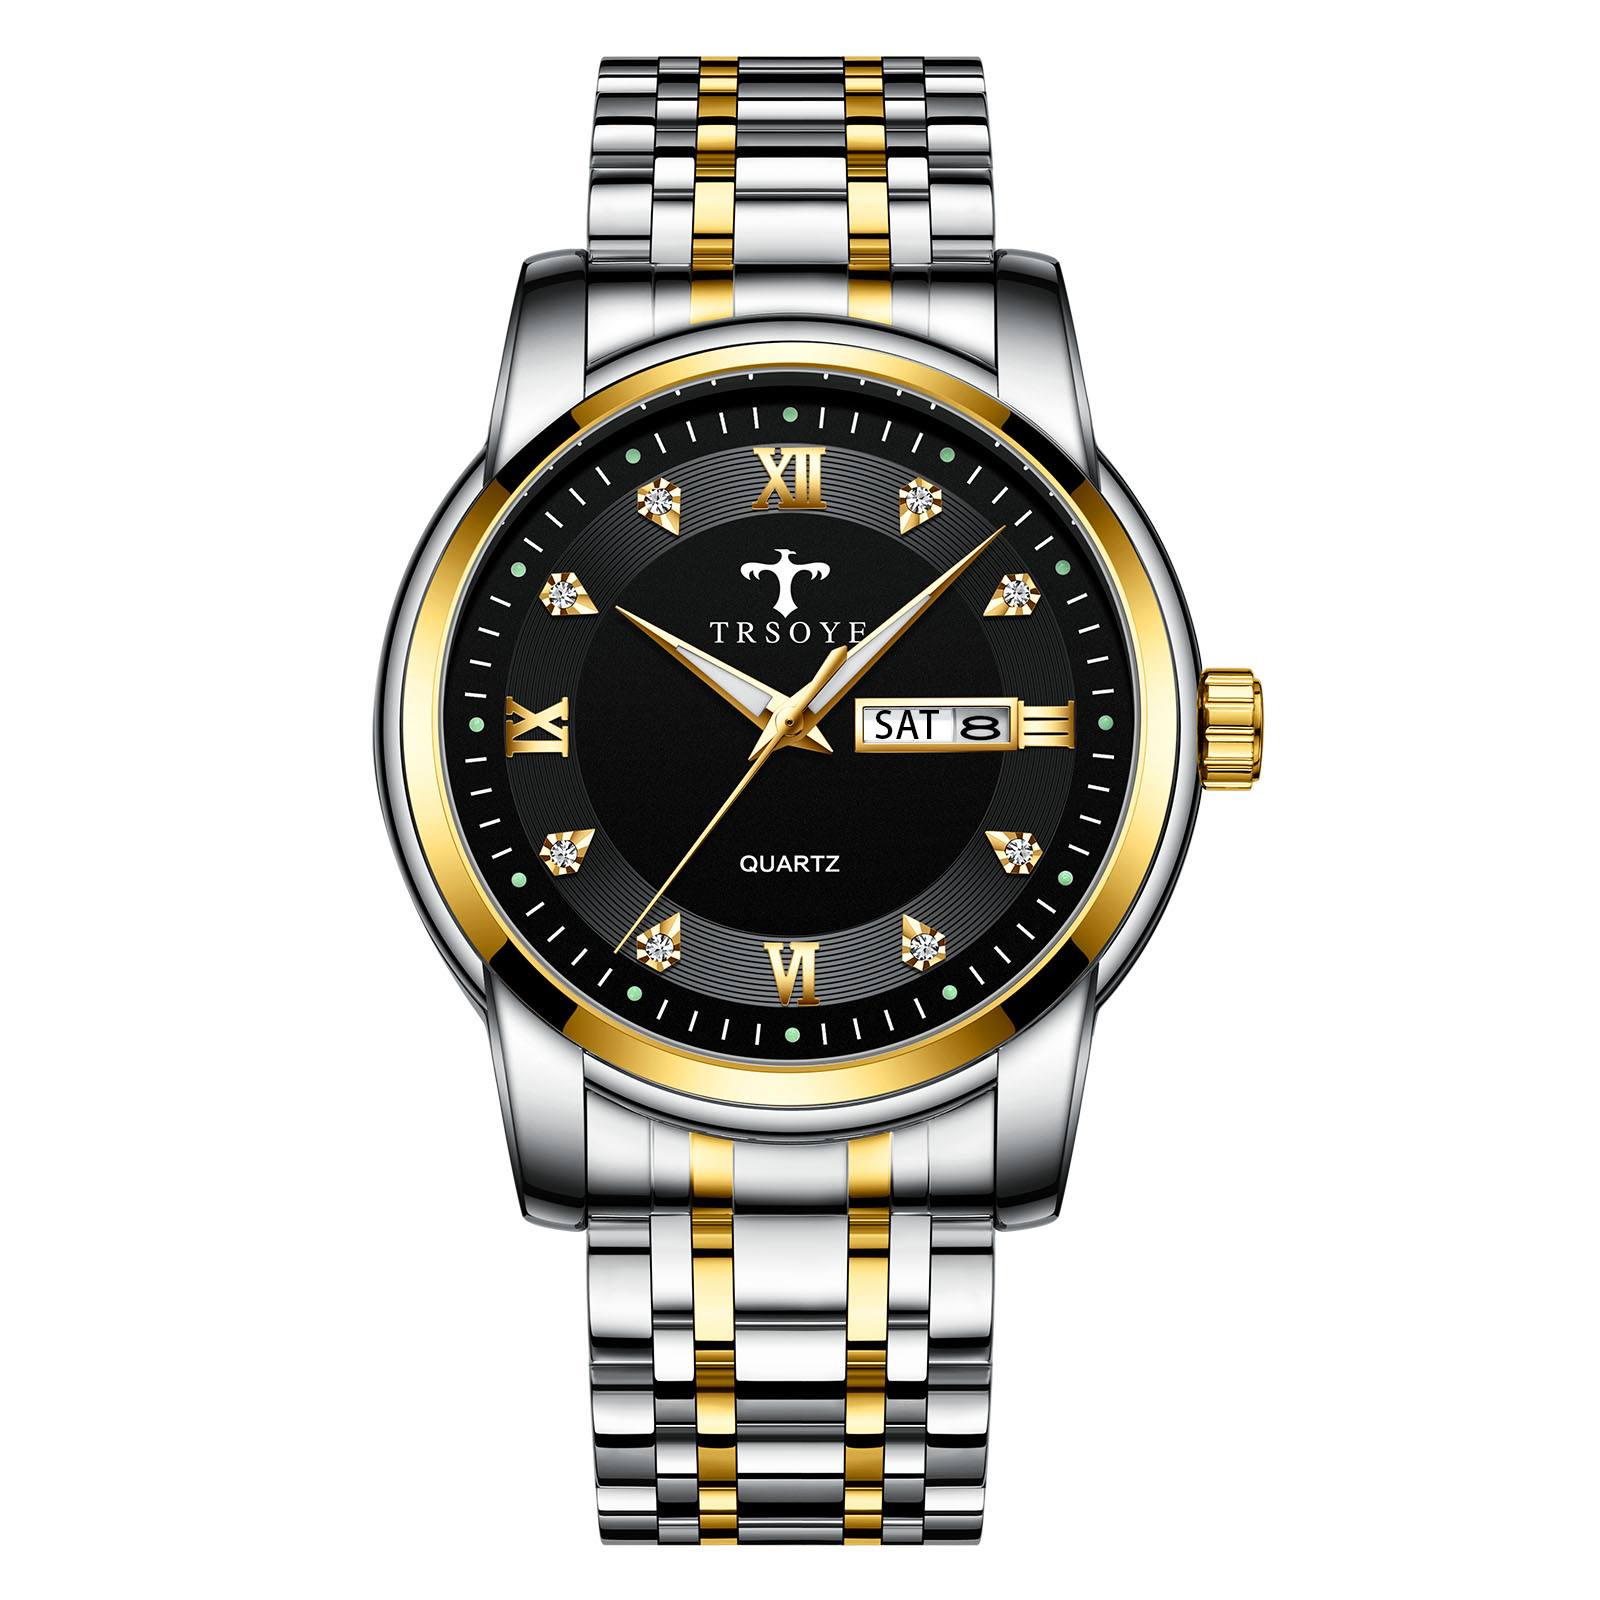 Top brand men watches hot sale quartz wristwatches for man waterproof cheap watch relojes relogio masculino